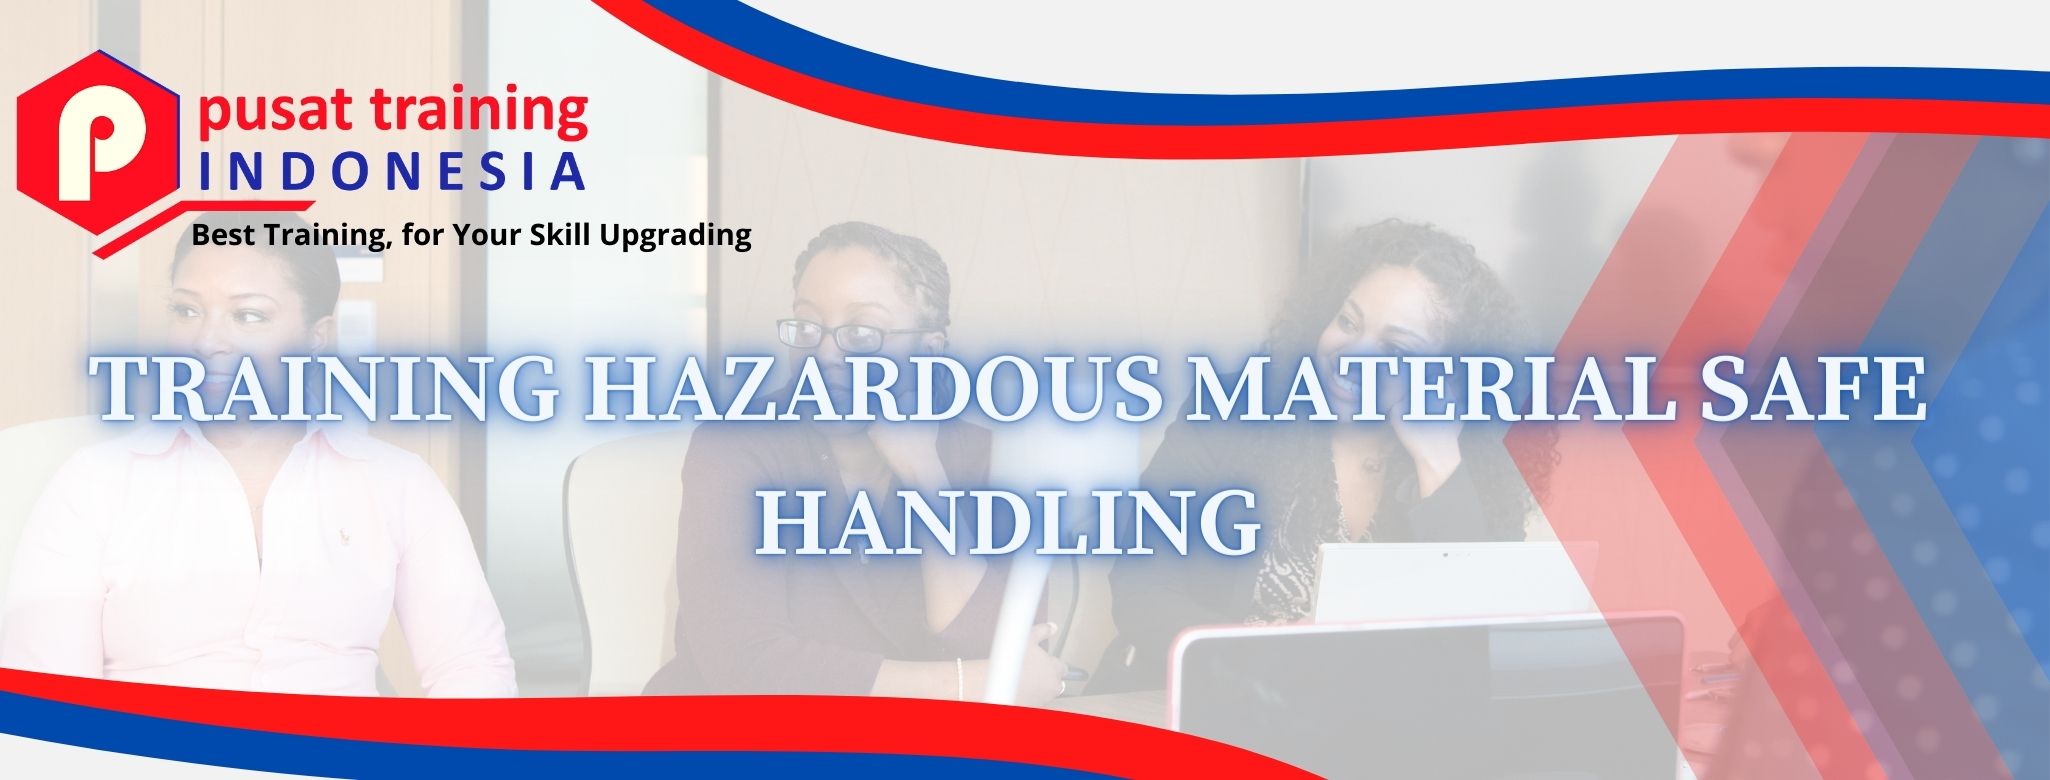 hazardous-material-safe-handling-training